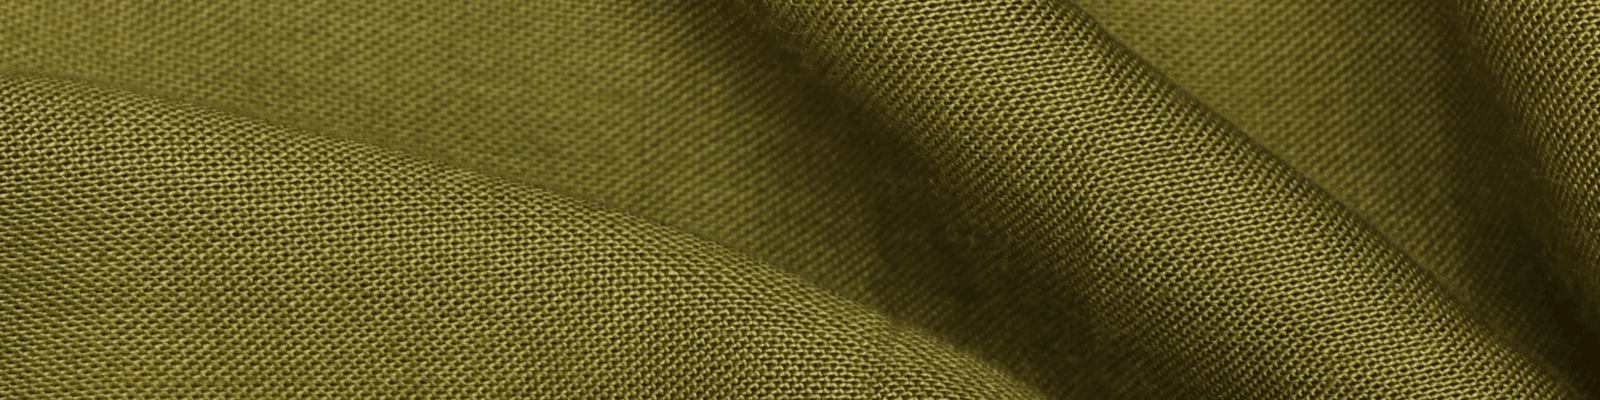 Maroon Plain Woven Rayon Fabric